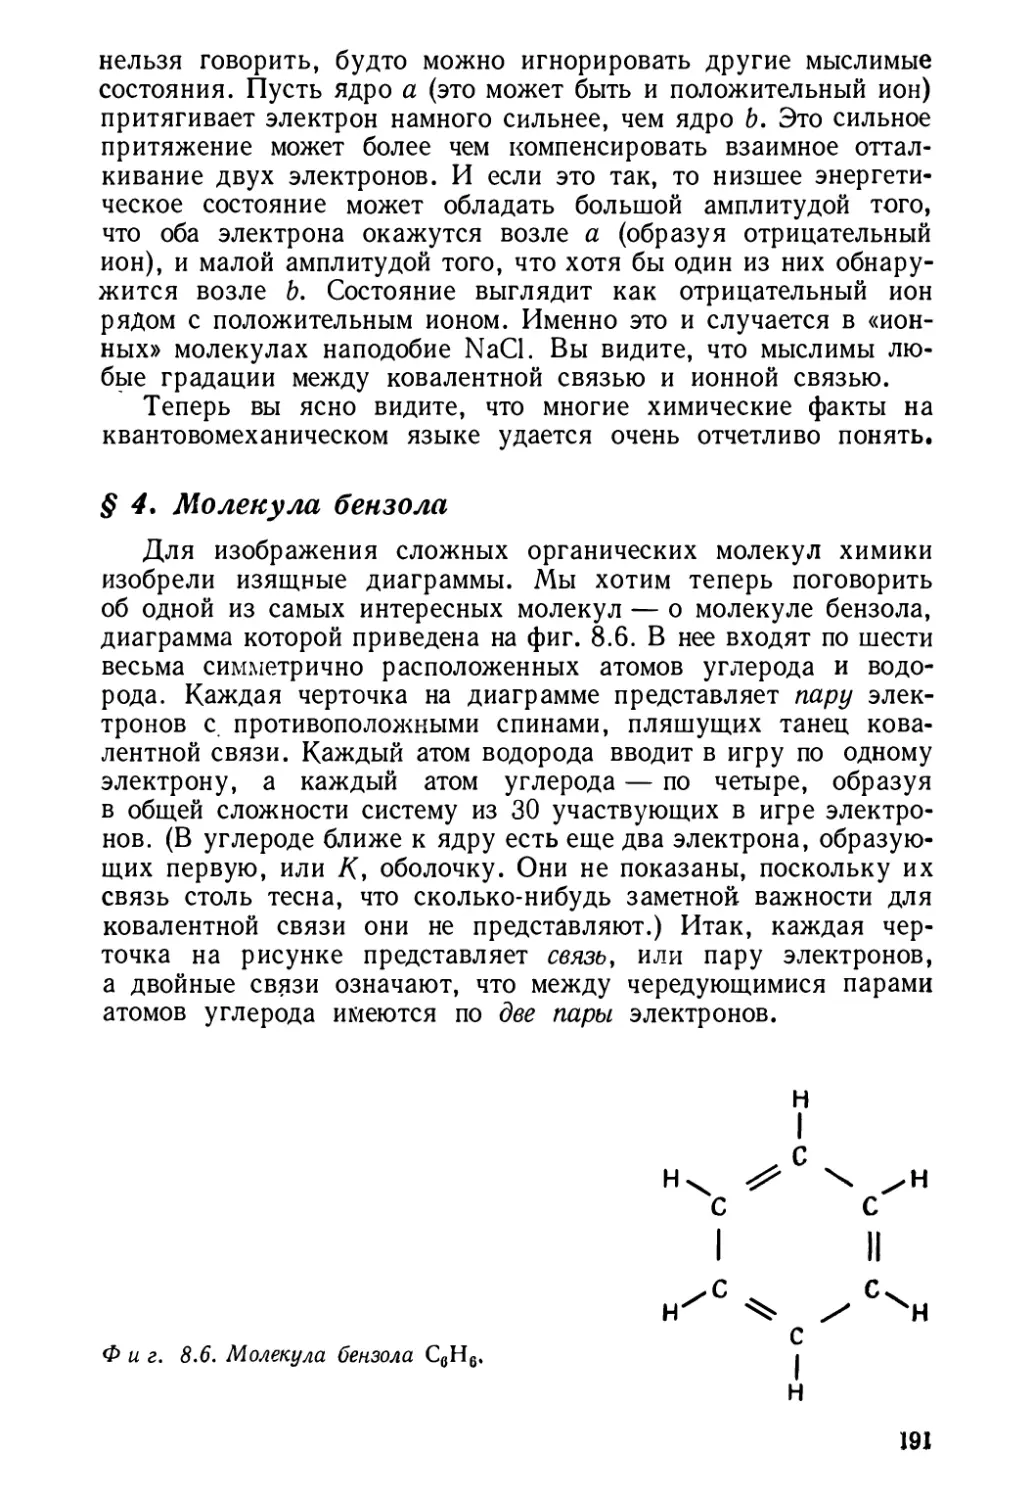 § 4. Молекула бензола